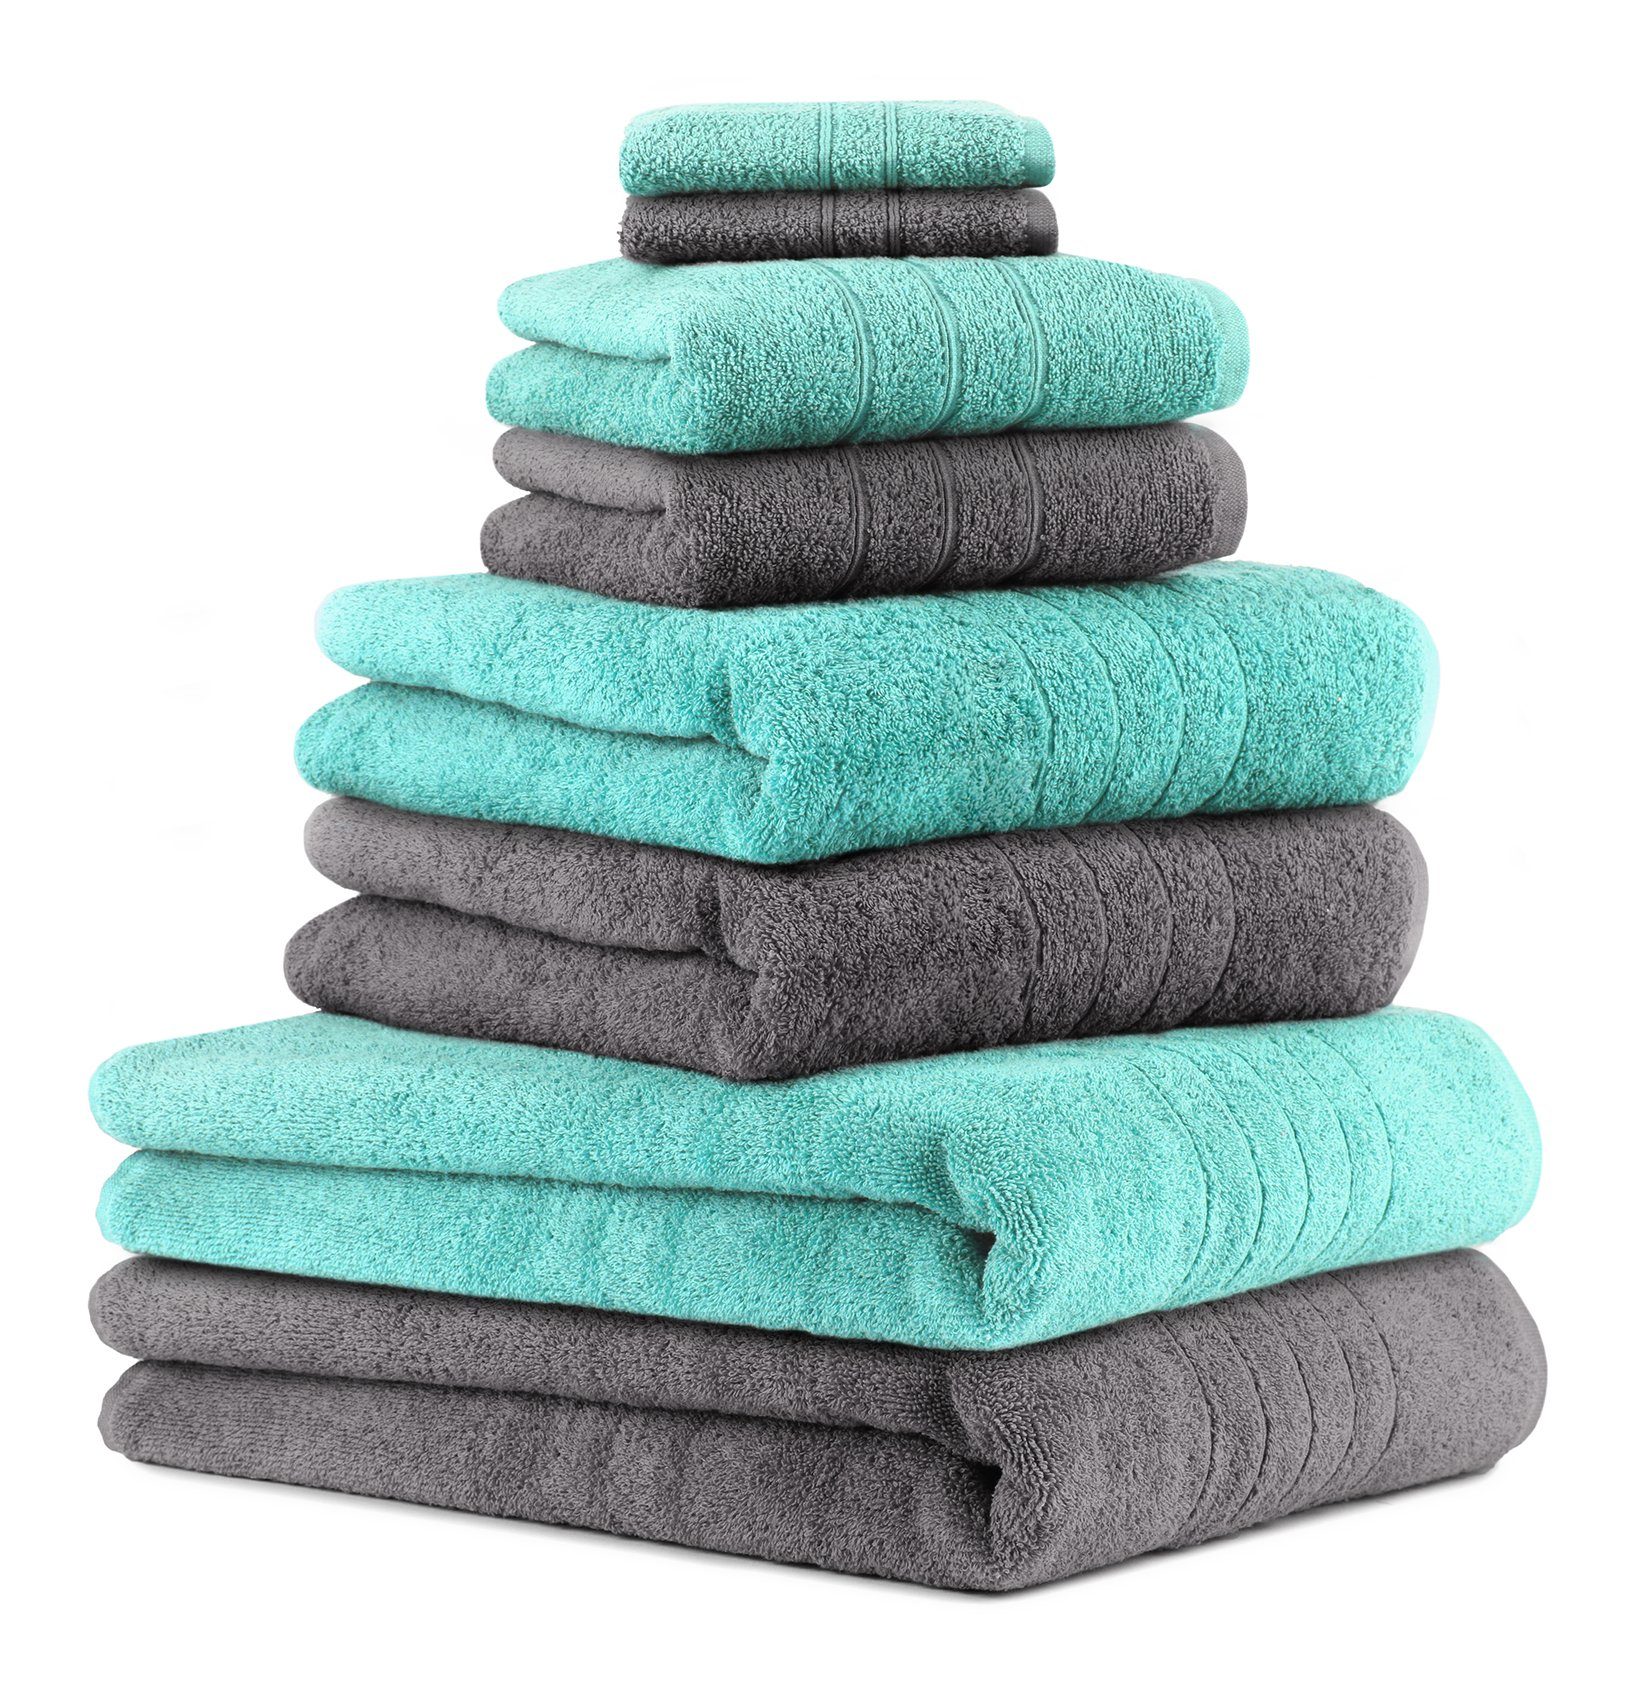 Betz Handtuch Set Badetücher Baumwolle, Seiftücher anthrazit 2 Deluxe grau Baumwolle Handtücher und Farbe 2 türkis, Duschtücher 2 100% 2 100% Handtuch-Set (8-tlg) 8-TLG